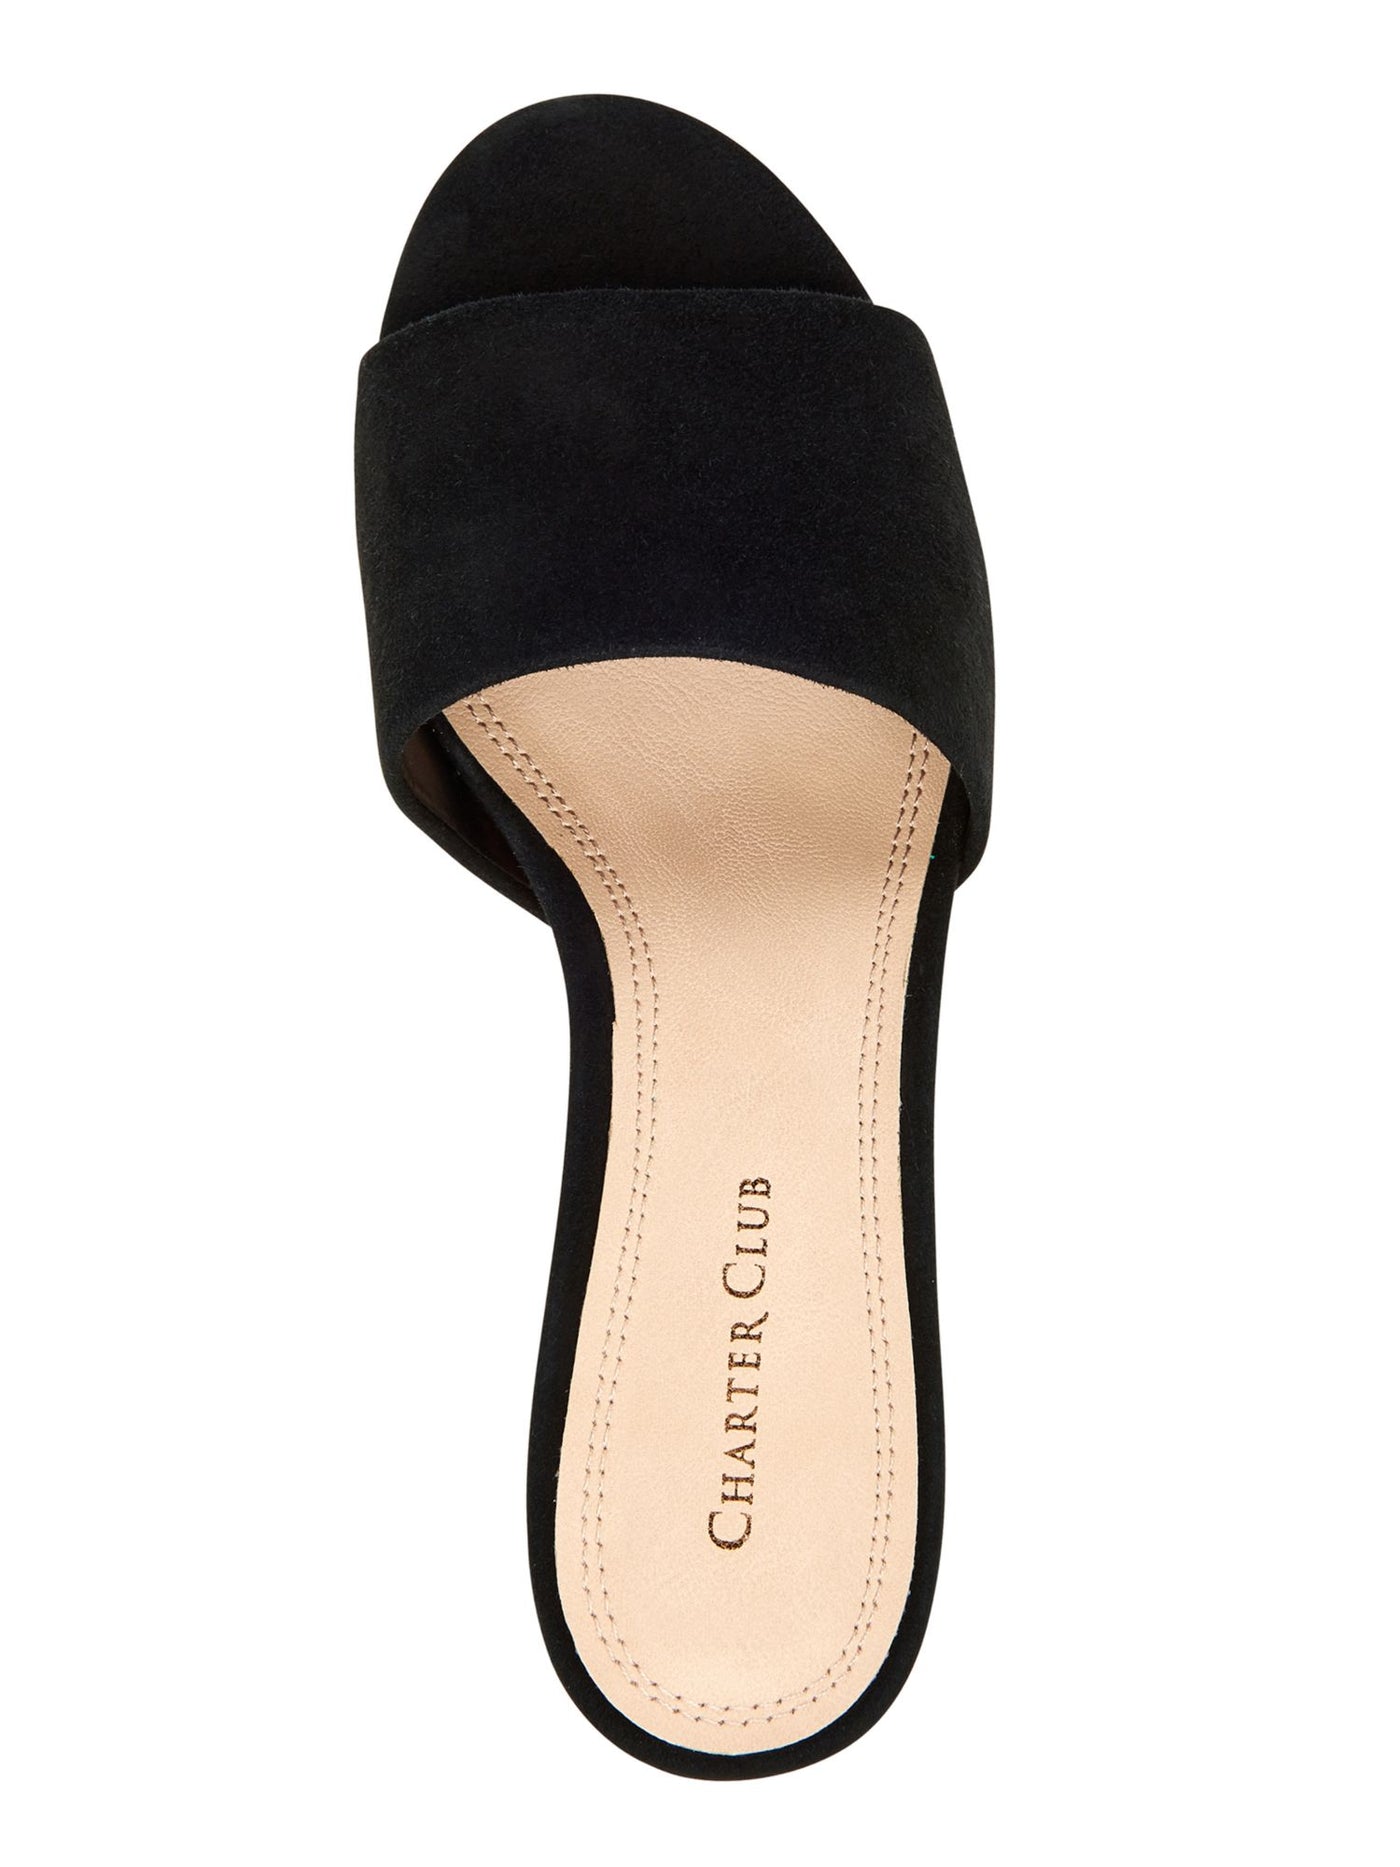 CHARTER CLUB Womens Black Cork Wedge Cushioned Nallahh Almond Toe Wedge Slip On Sandals Shoes 8.5 M